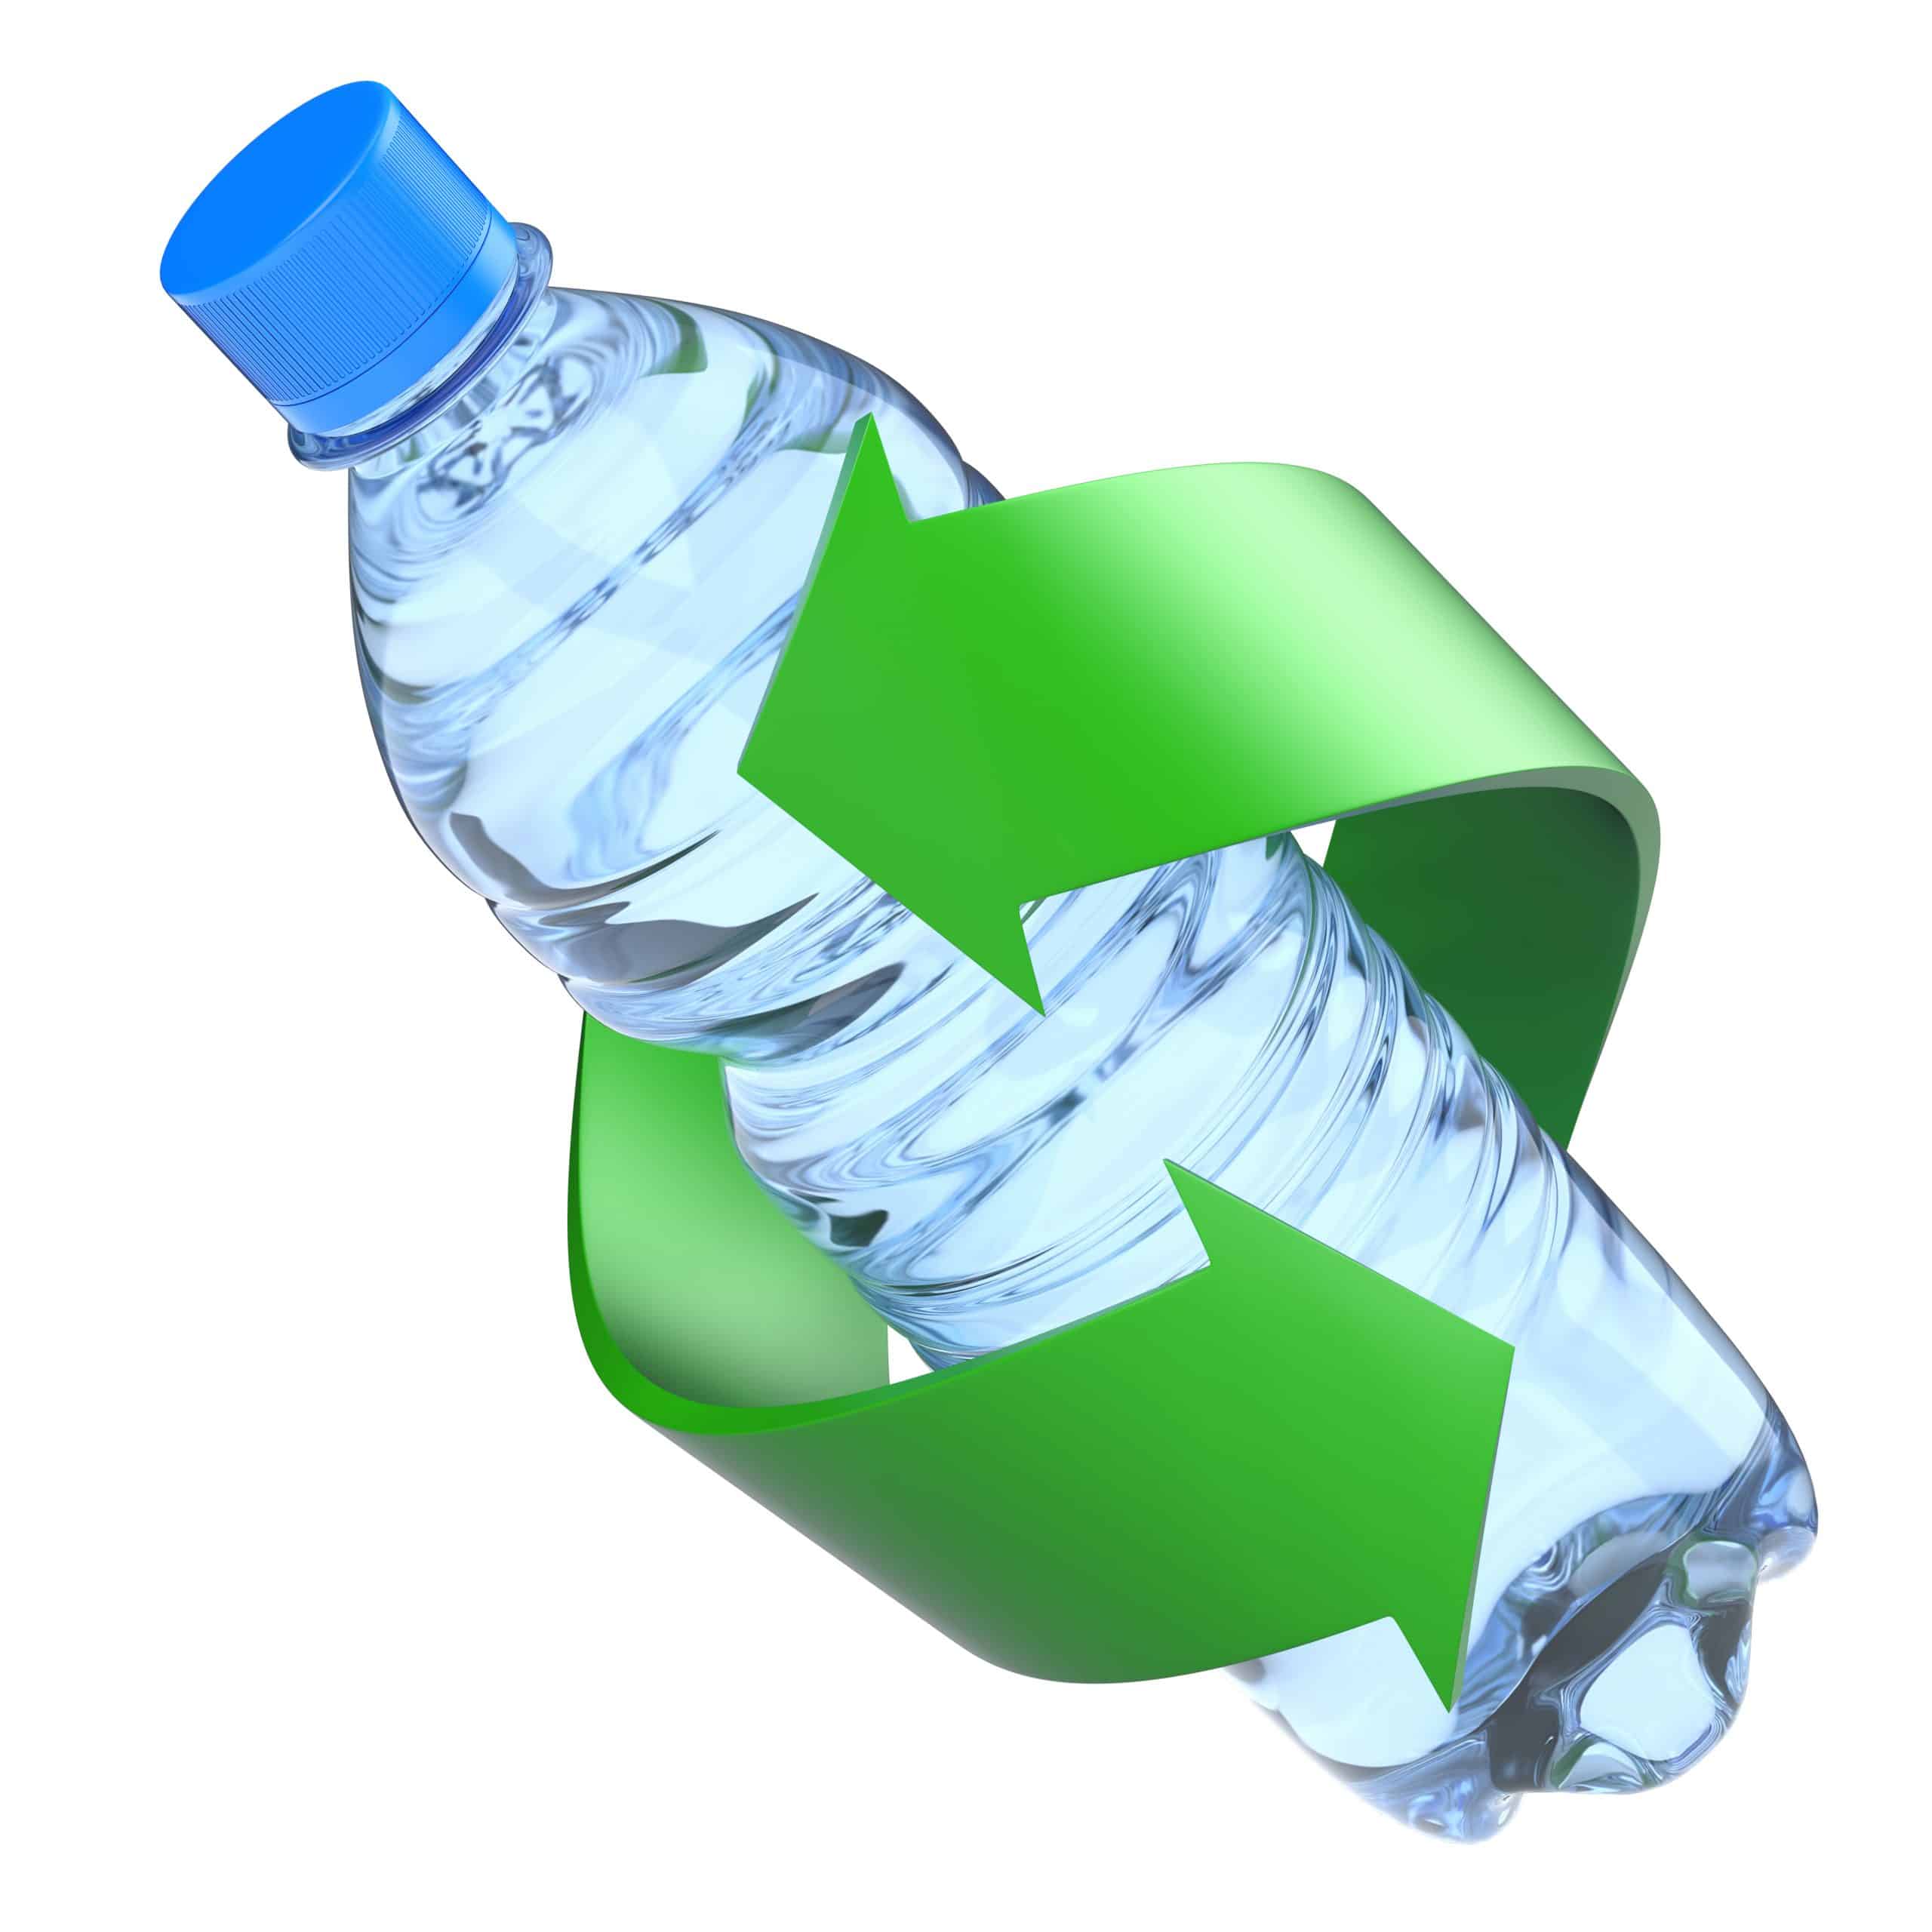 Plastic Bottle Recycling Concept